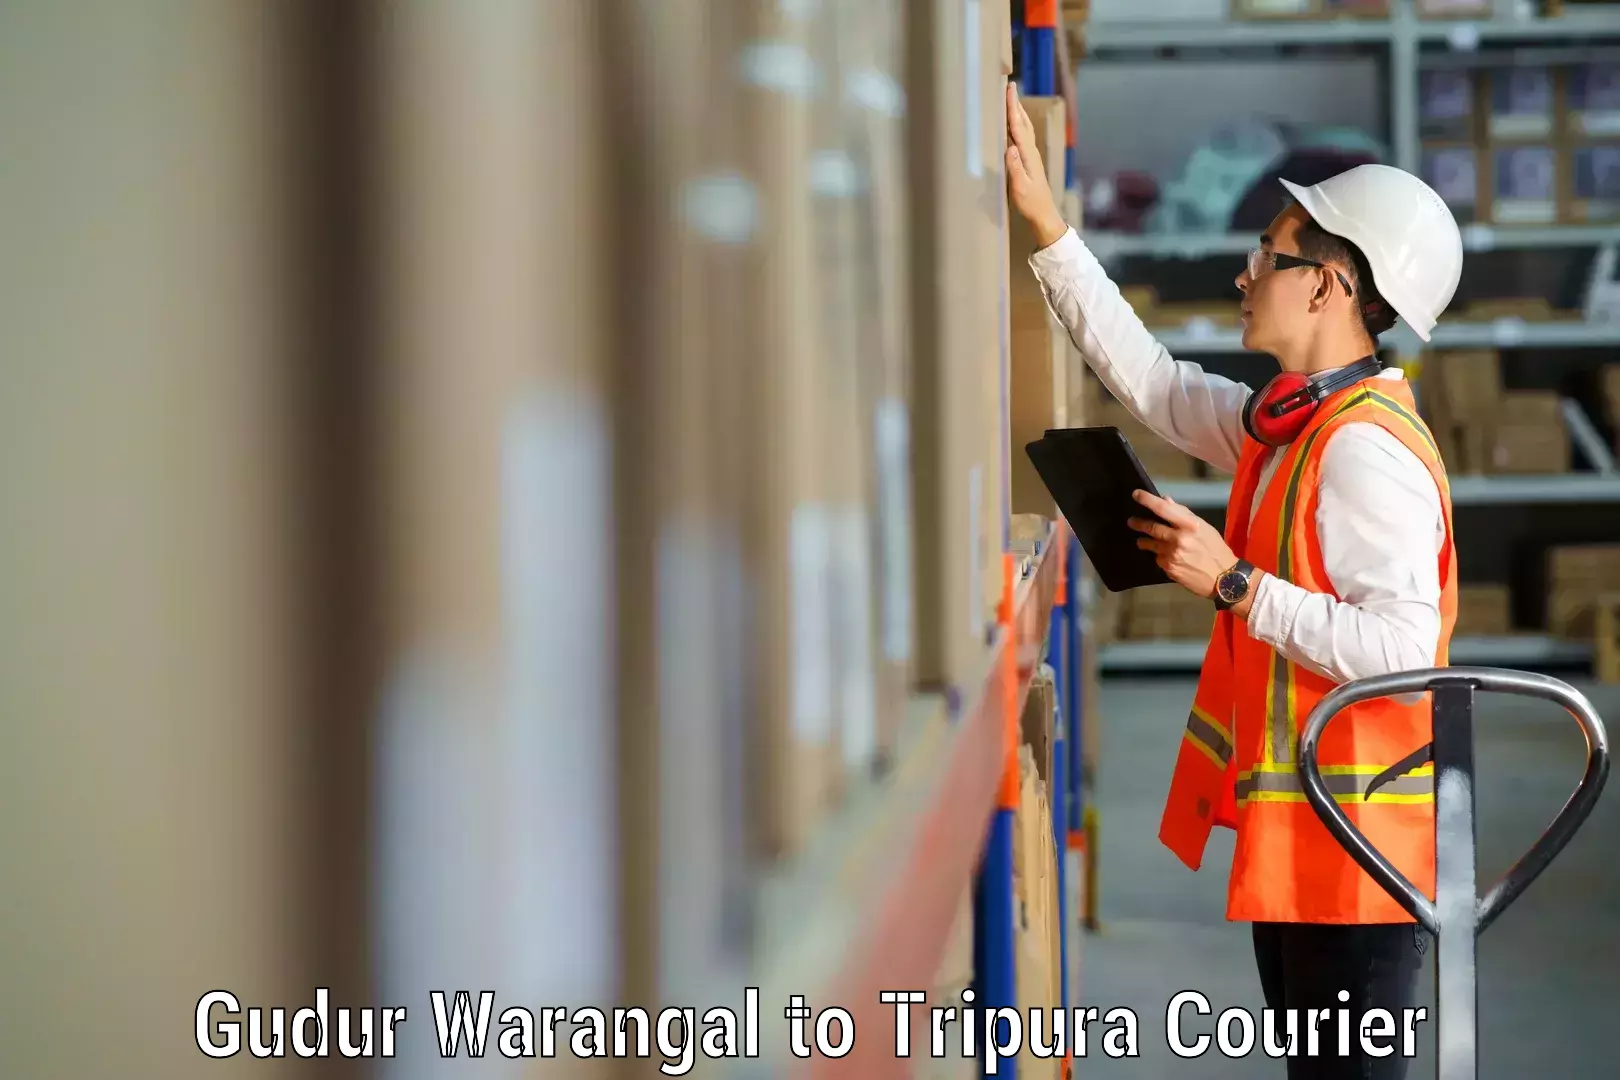 Seamless moving process Gudur Warangal to Udaipur Tripura